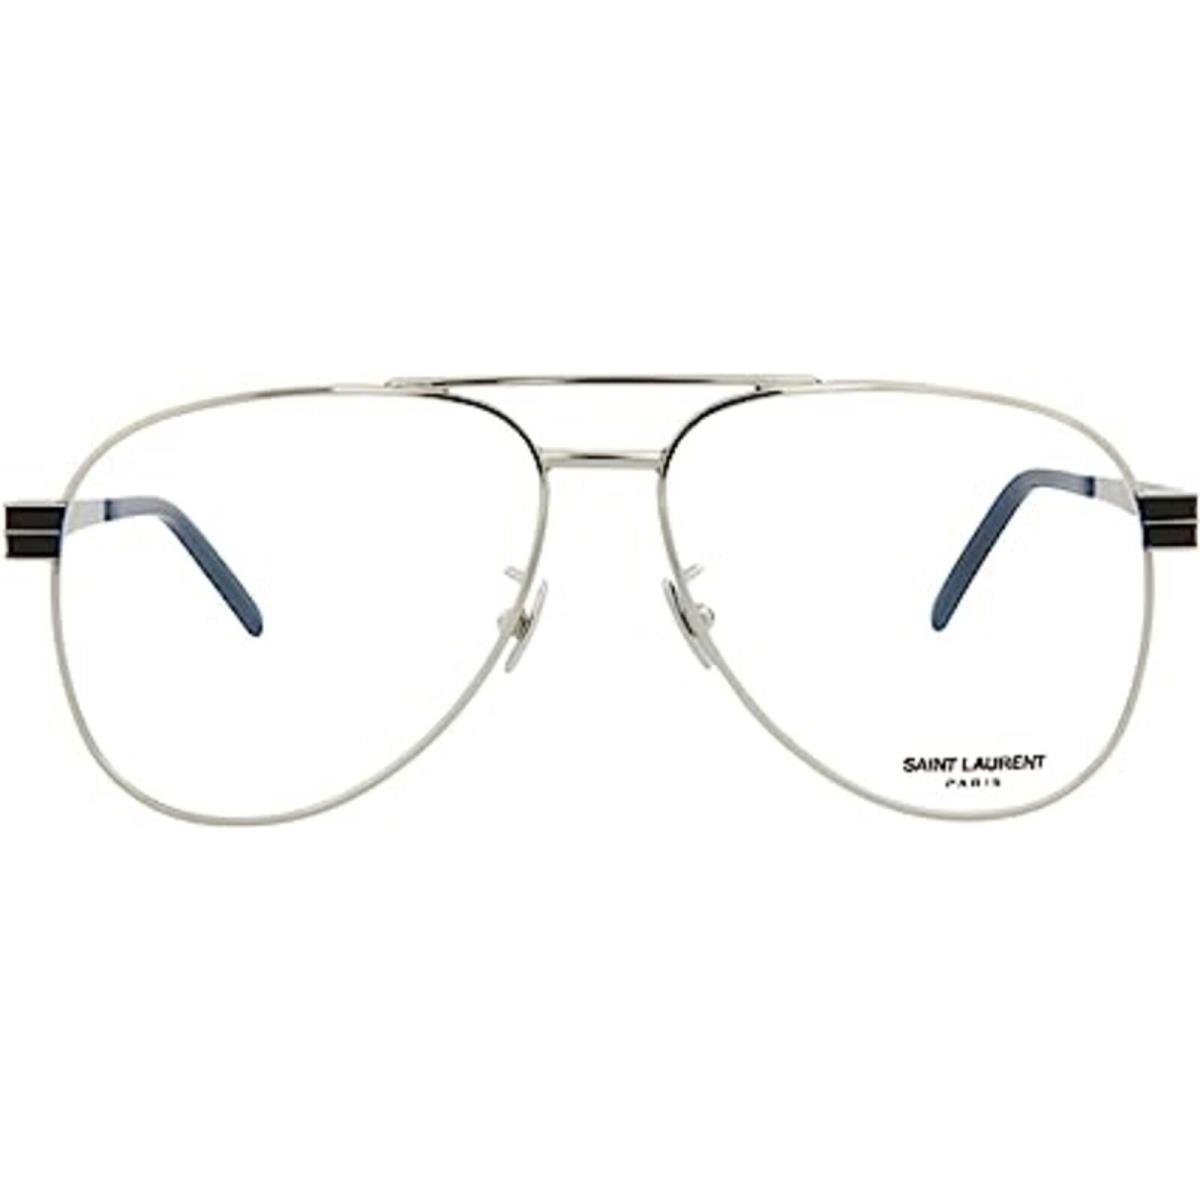 Saint Laurent Unisex Eyeglasses Silver Metal Frame Saint Laurent SLM54 2